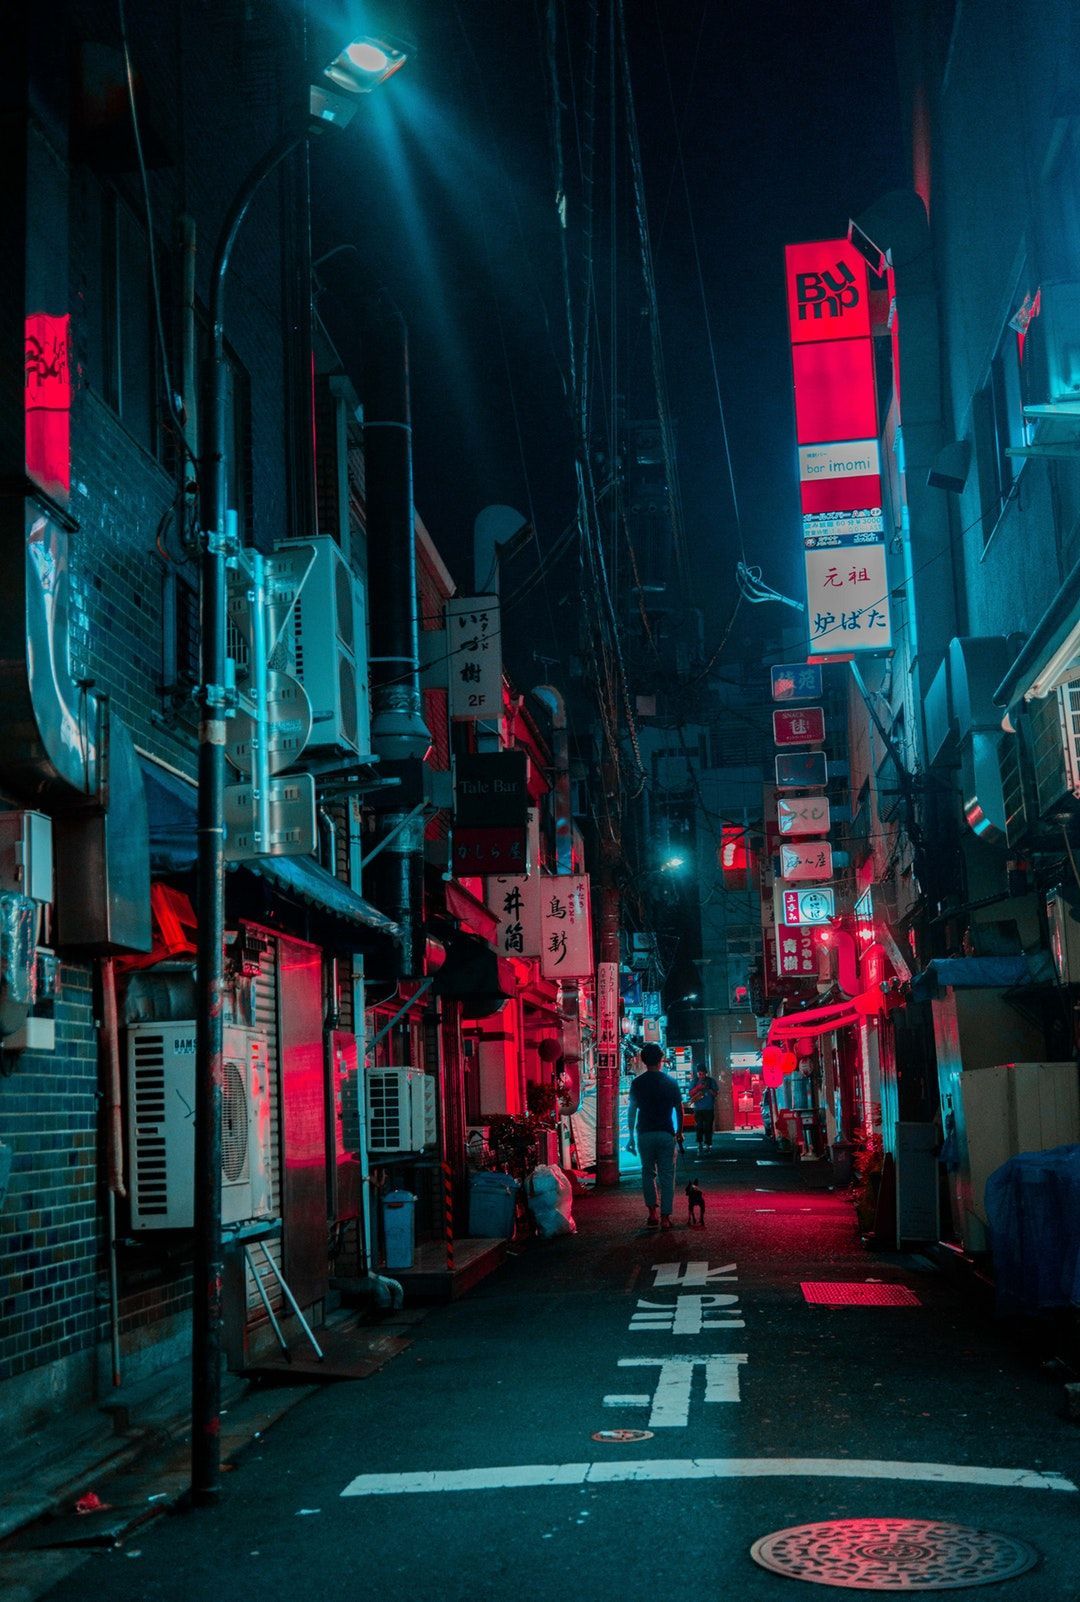 Download this free HD photo of street, person, cyberpunk and tokyo in Japan by Steve Roe. Pemandangan kota, Fotografi kota, Wisata jepang